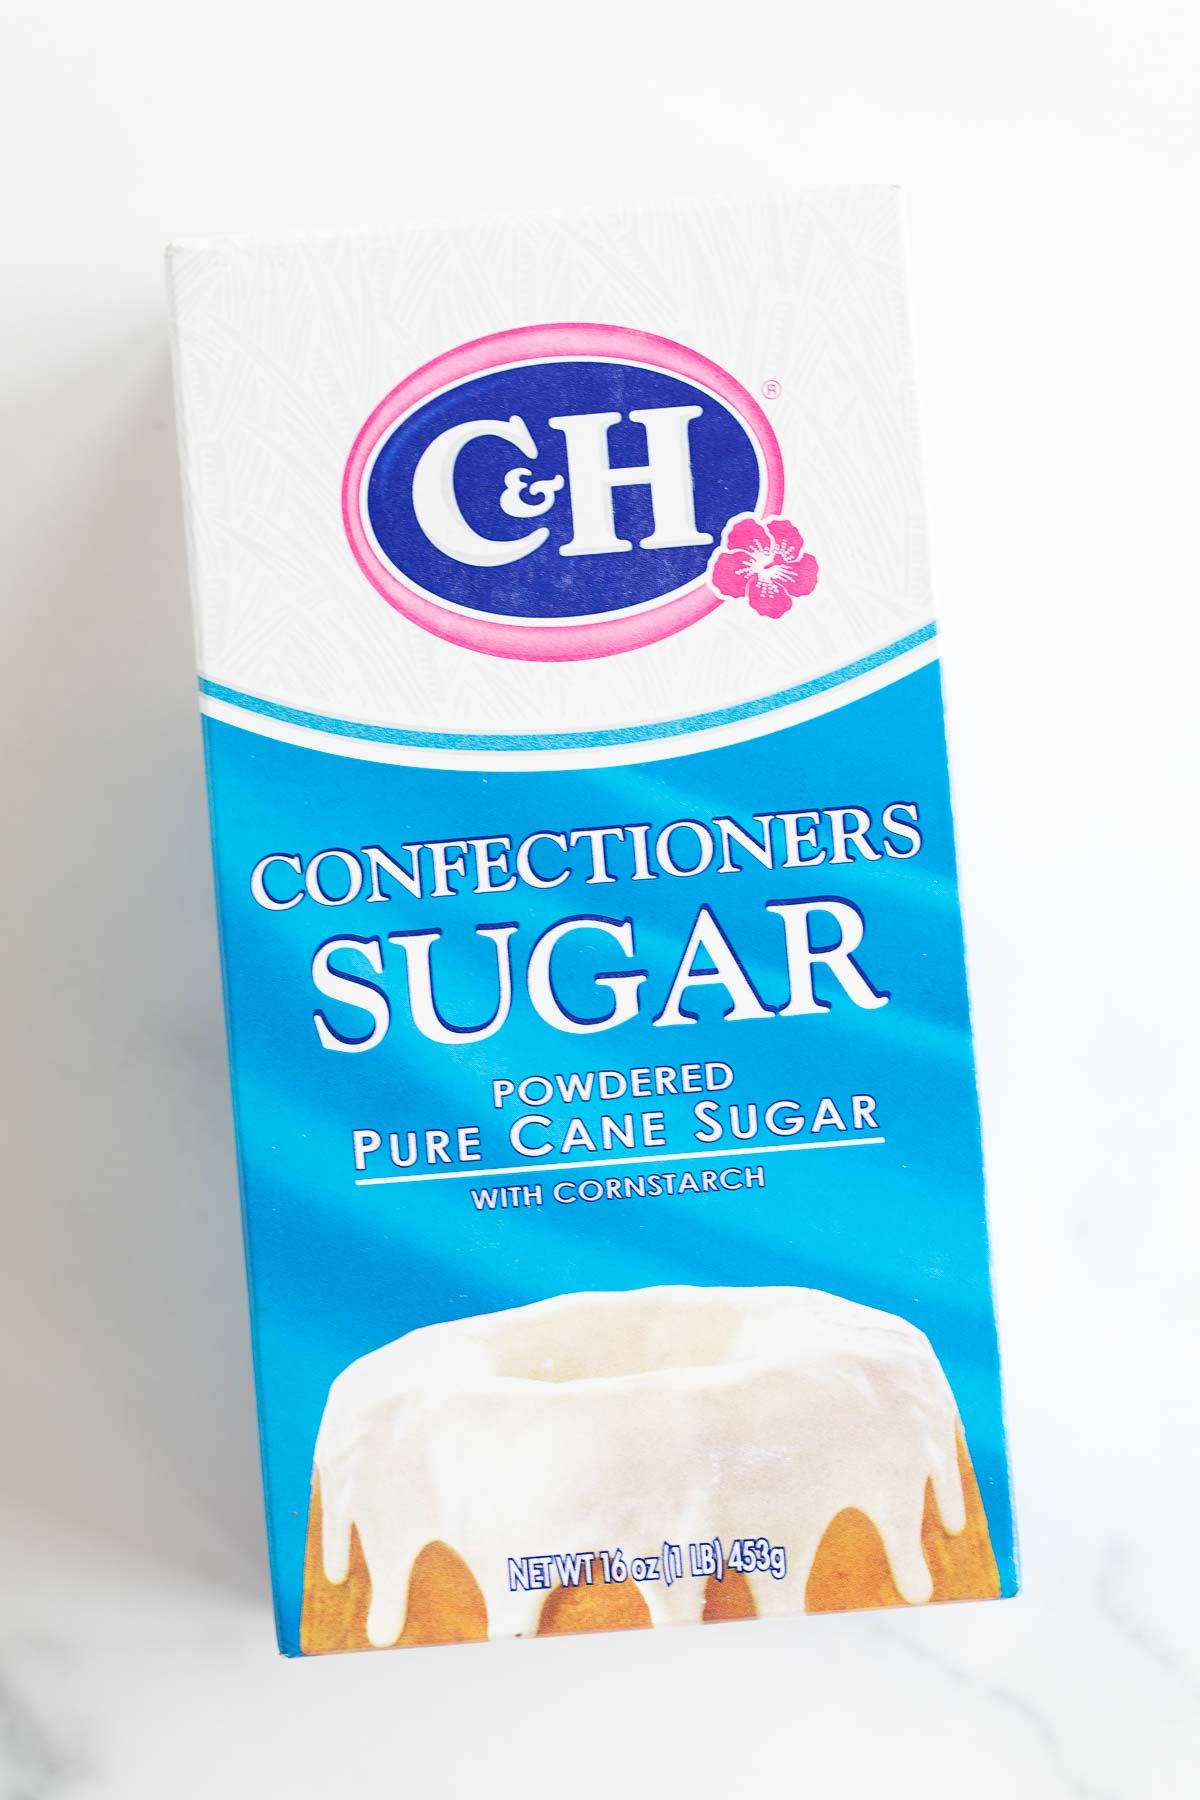 bag of confectioner's sugar powdered pure cane sugar